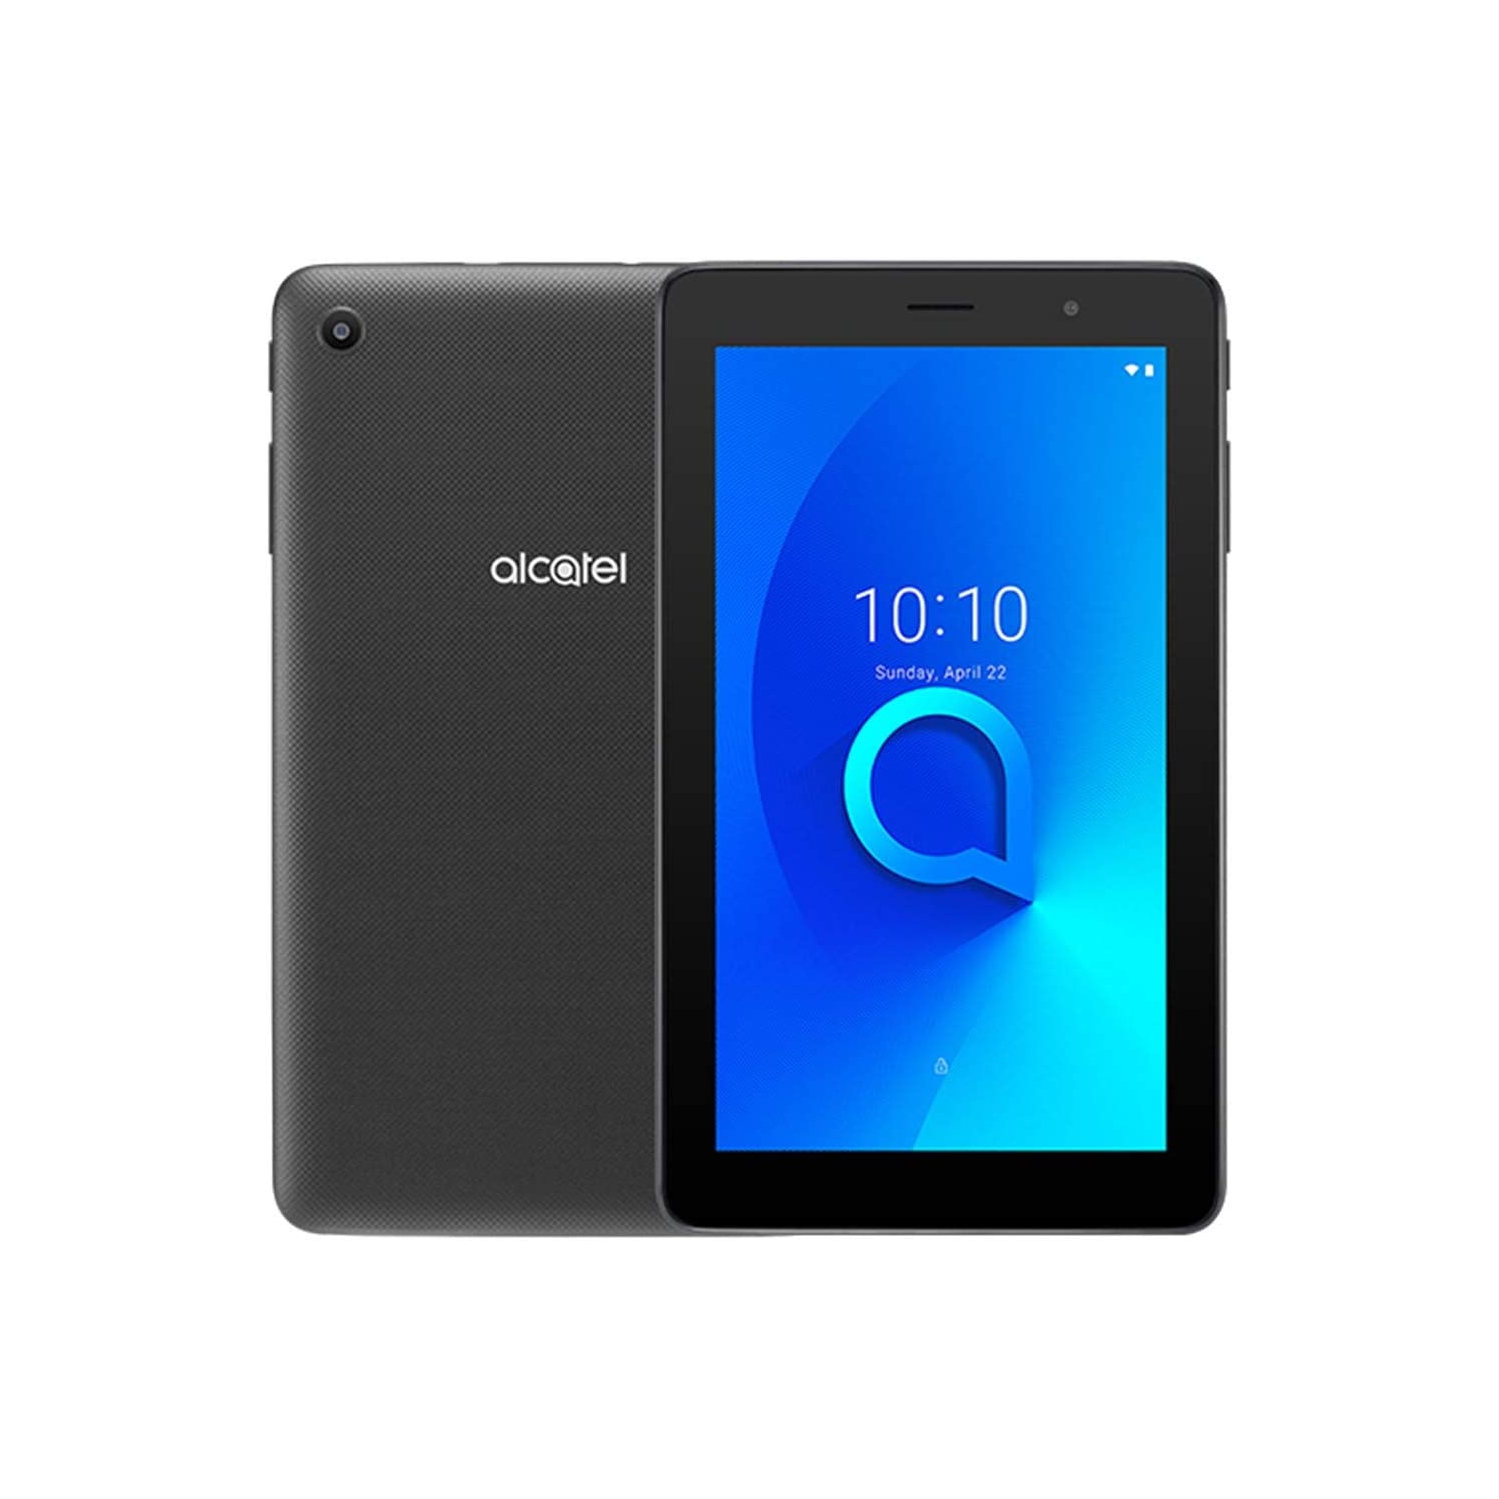 Alcatel 1T7 9013A (16GB) 7.0" 4G Android 10 Tablet (WiFi + Cellular) - Unlocked - Prime Black - International Model - Brand New